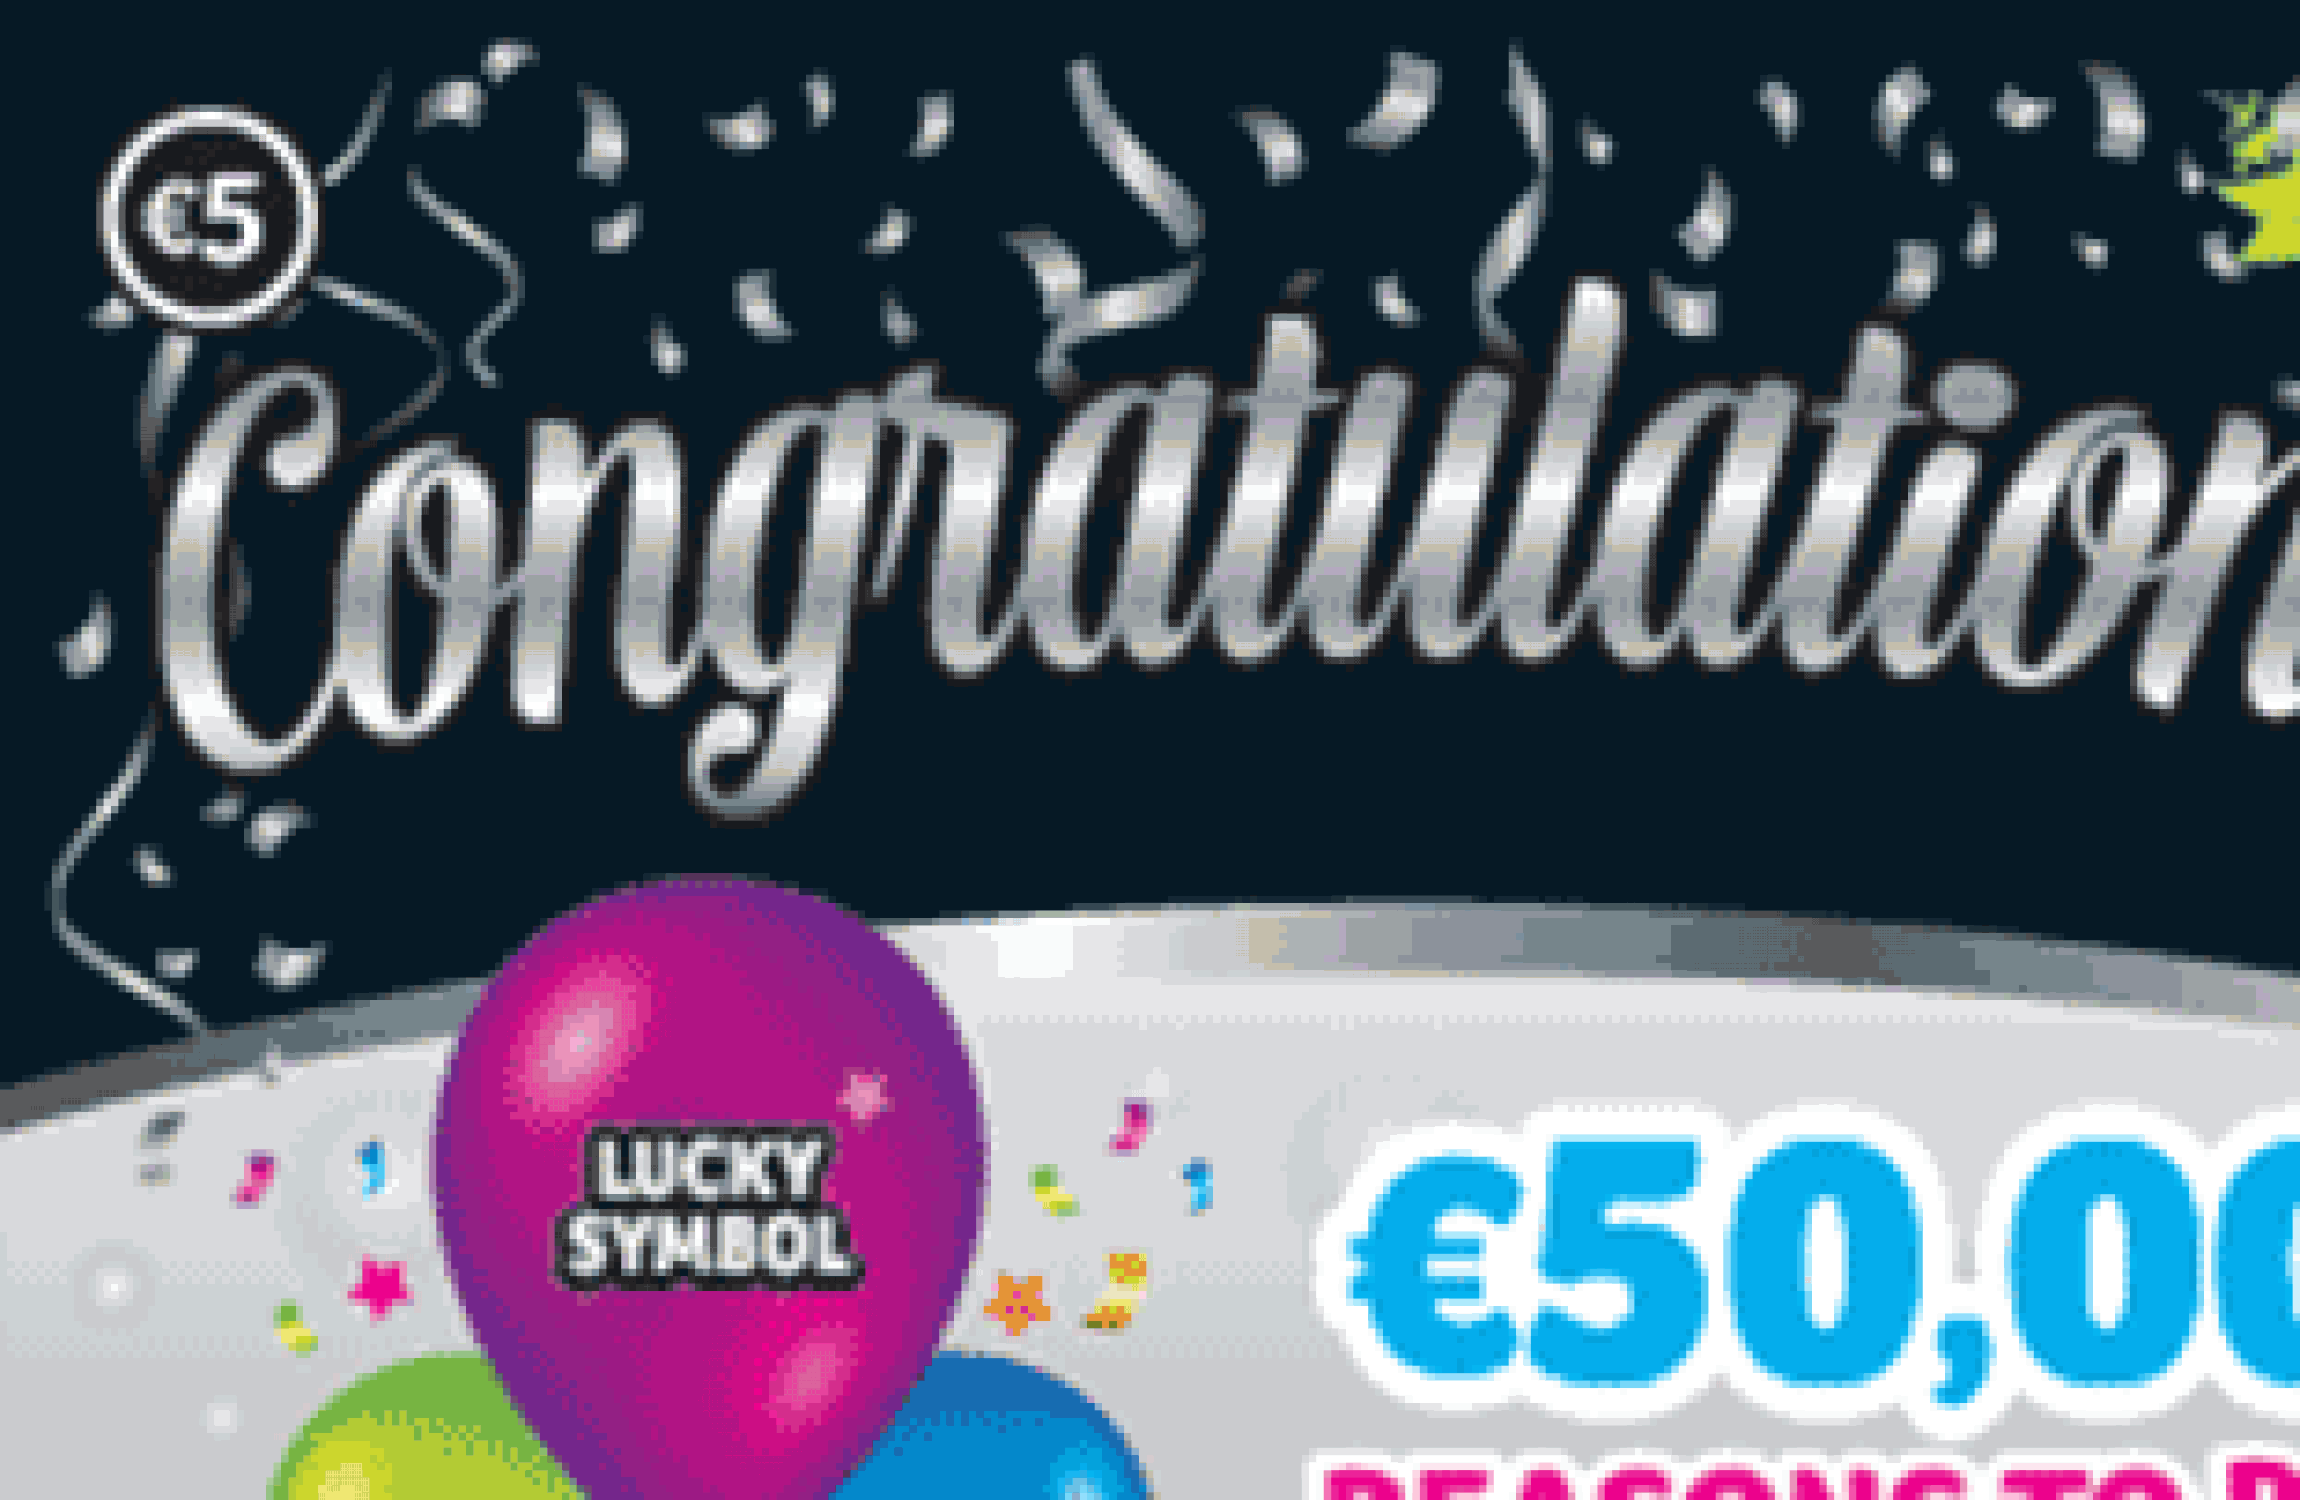 irish lotto results jackpot joy